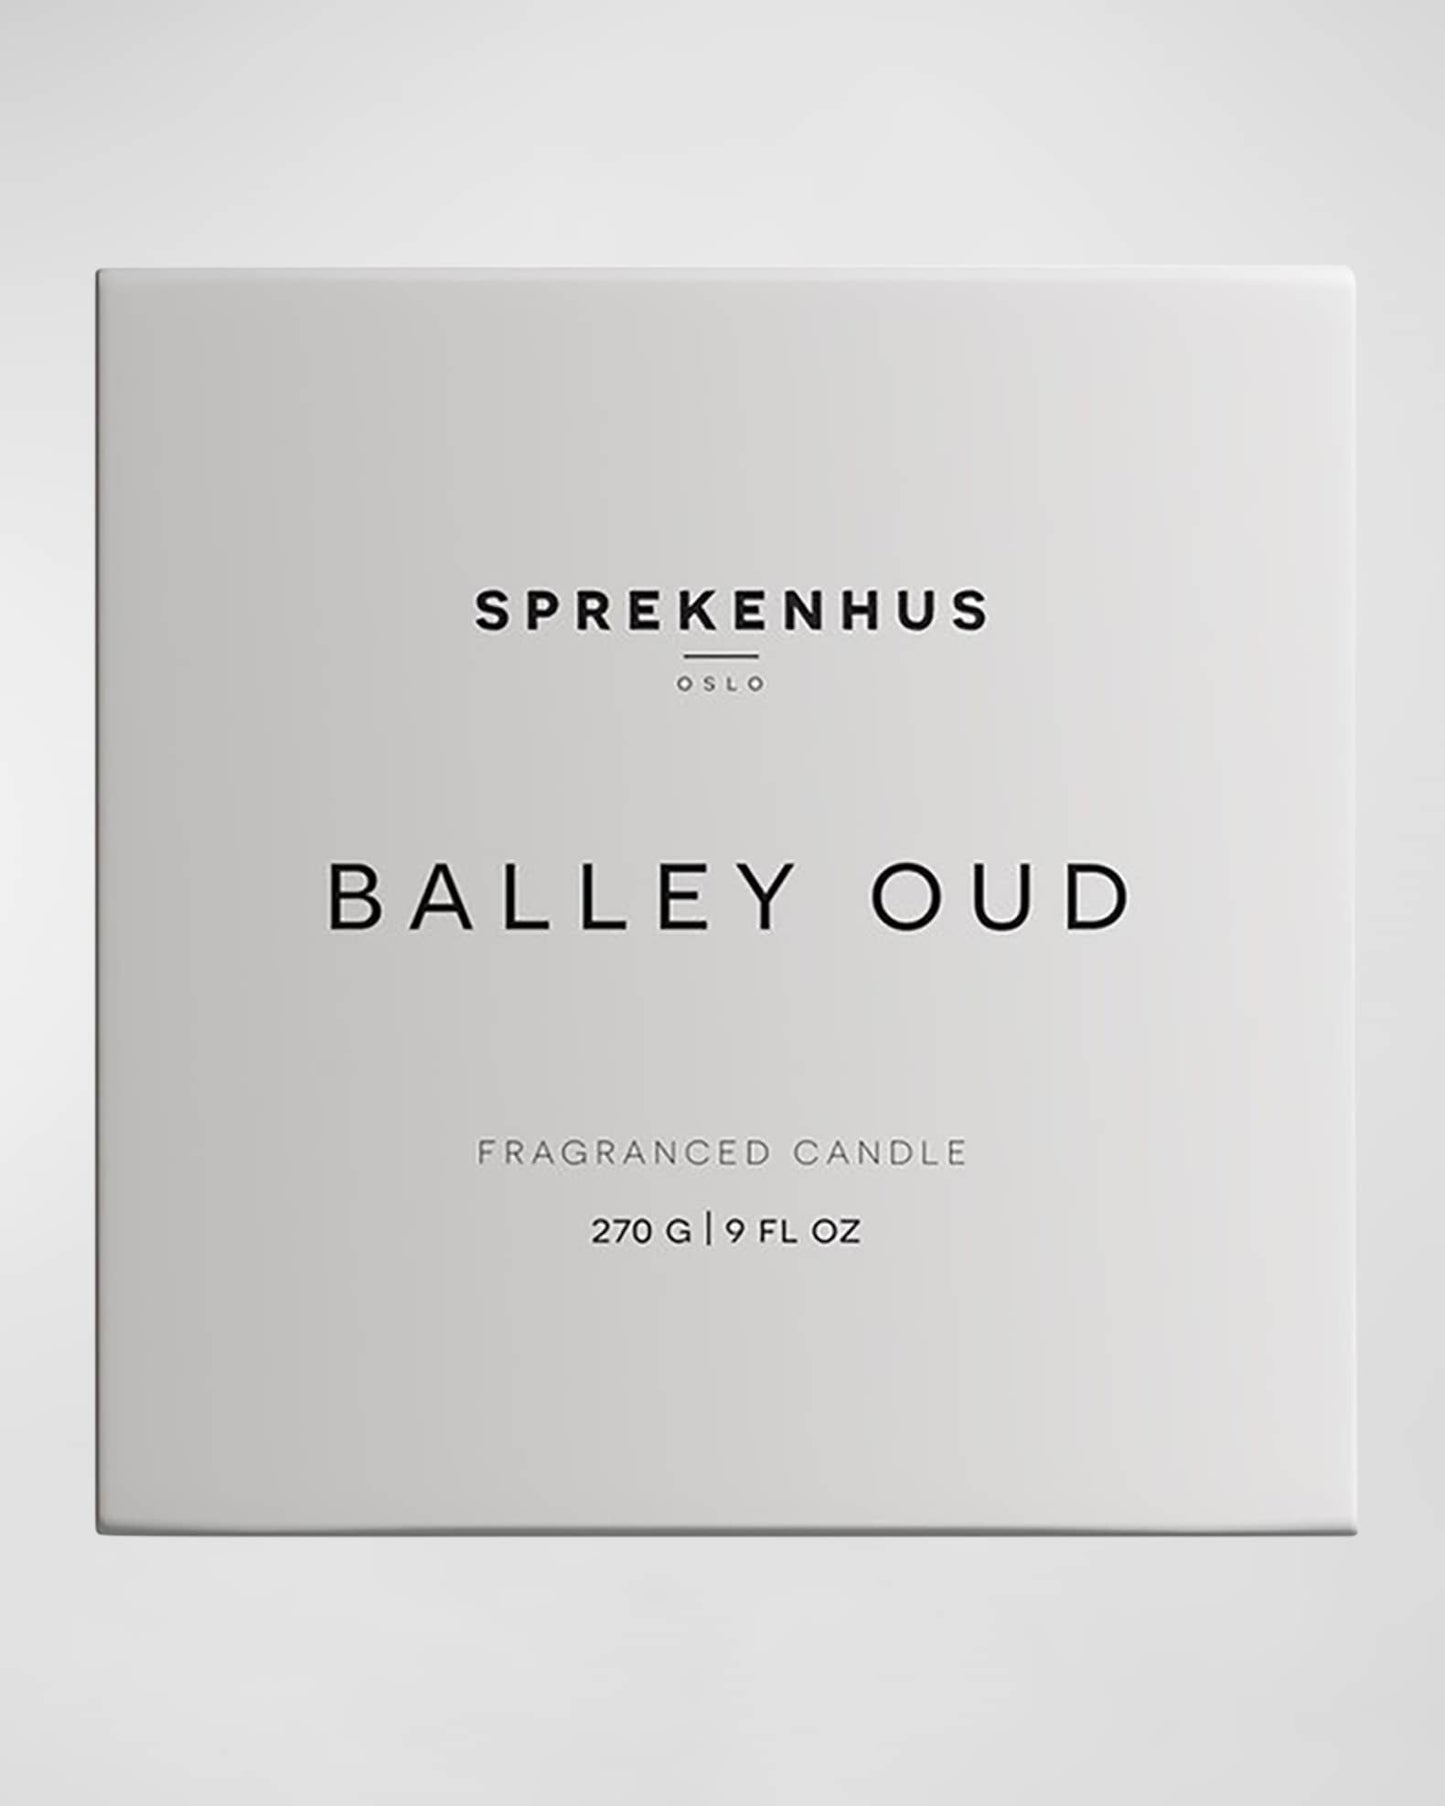 SPREKENHUS BALLEY OUD FRAGRANCED CANDLE - $80.00